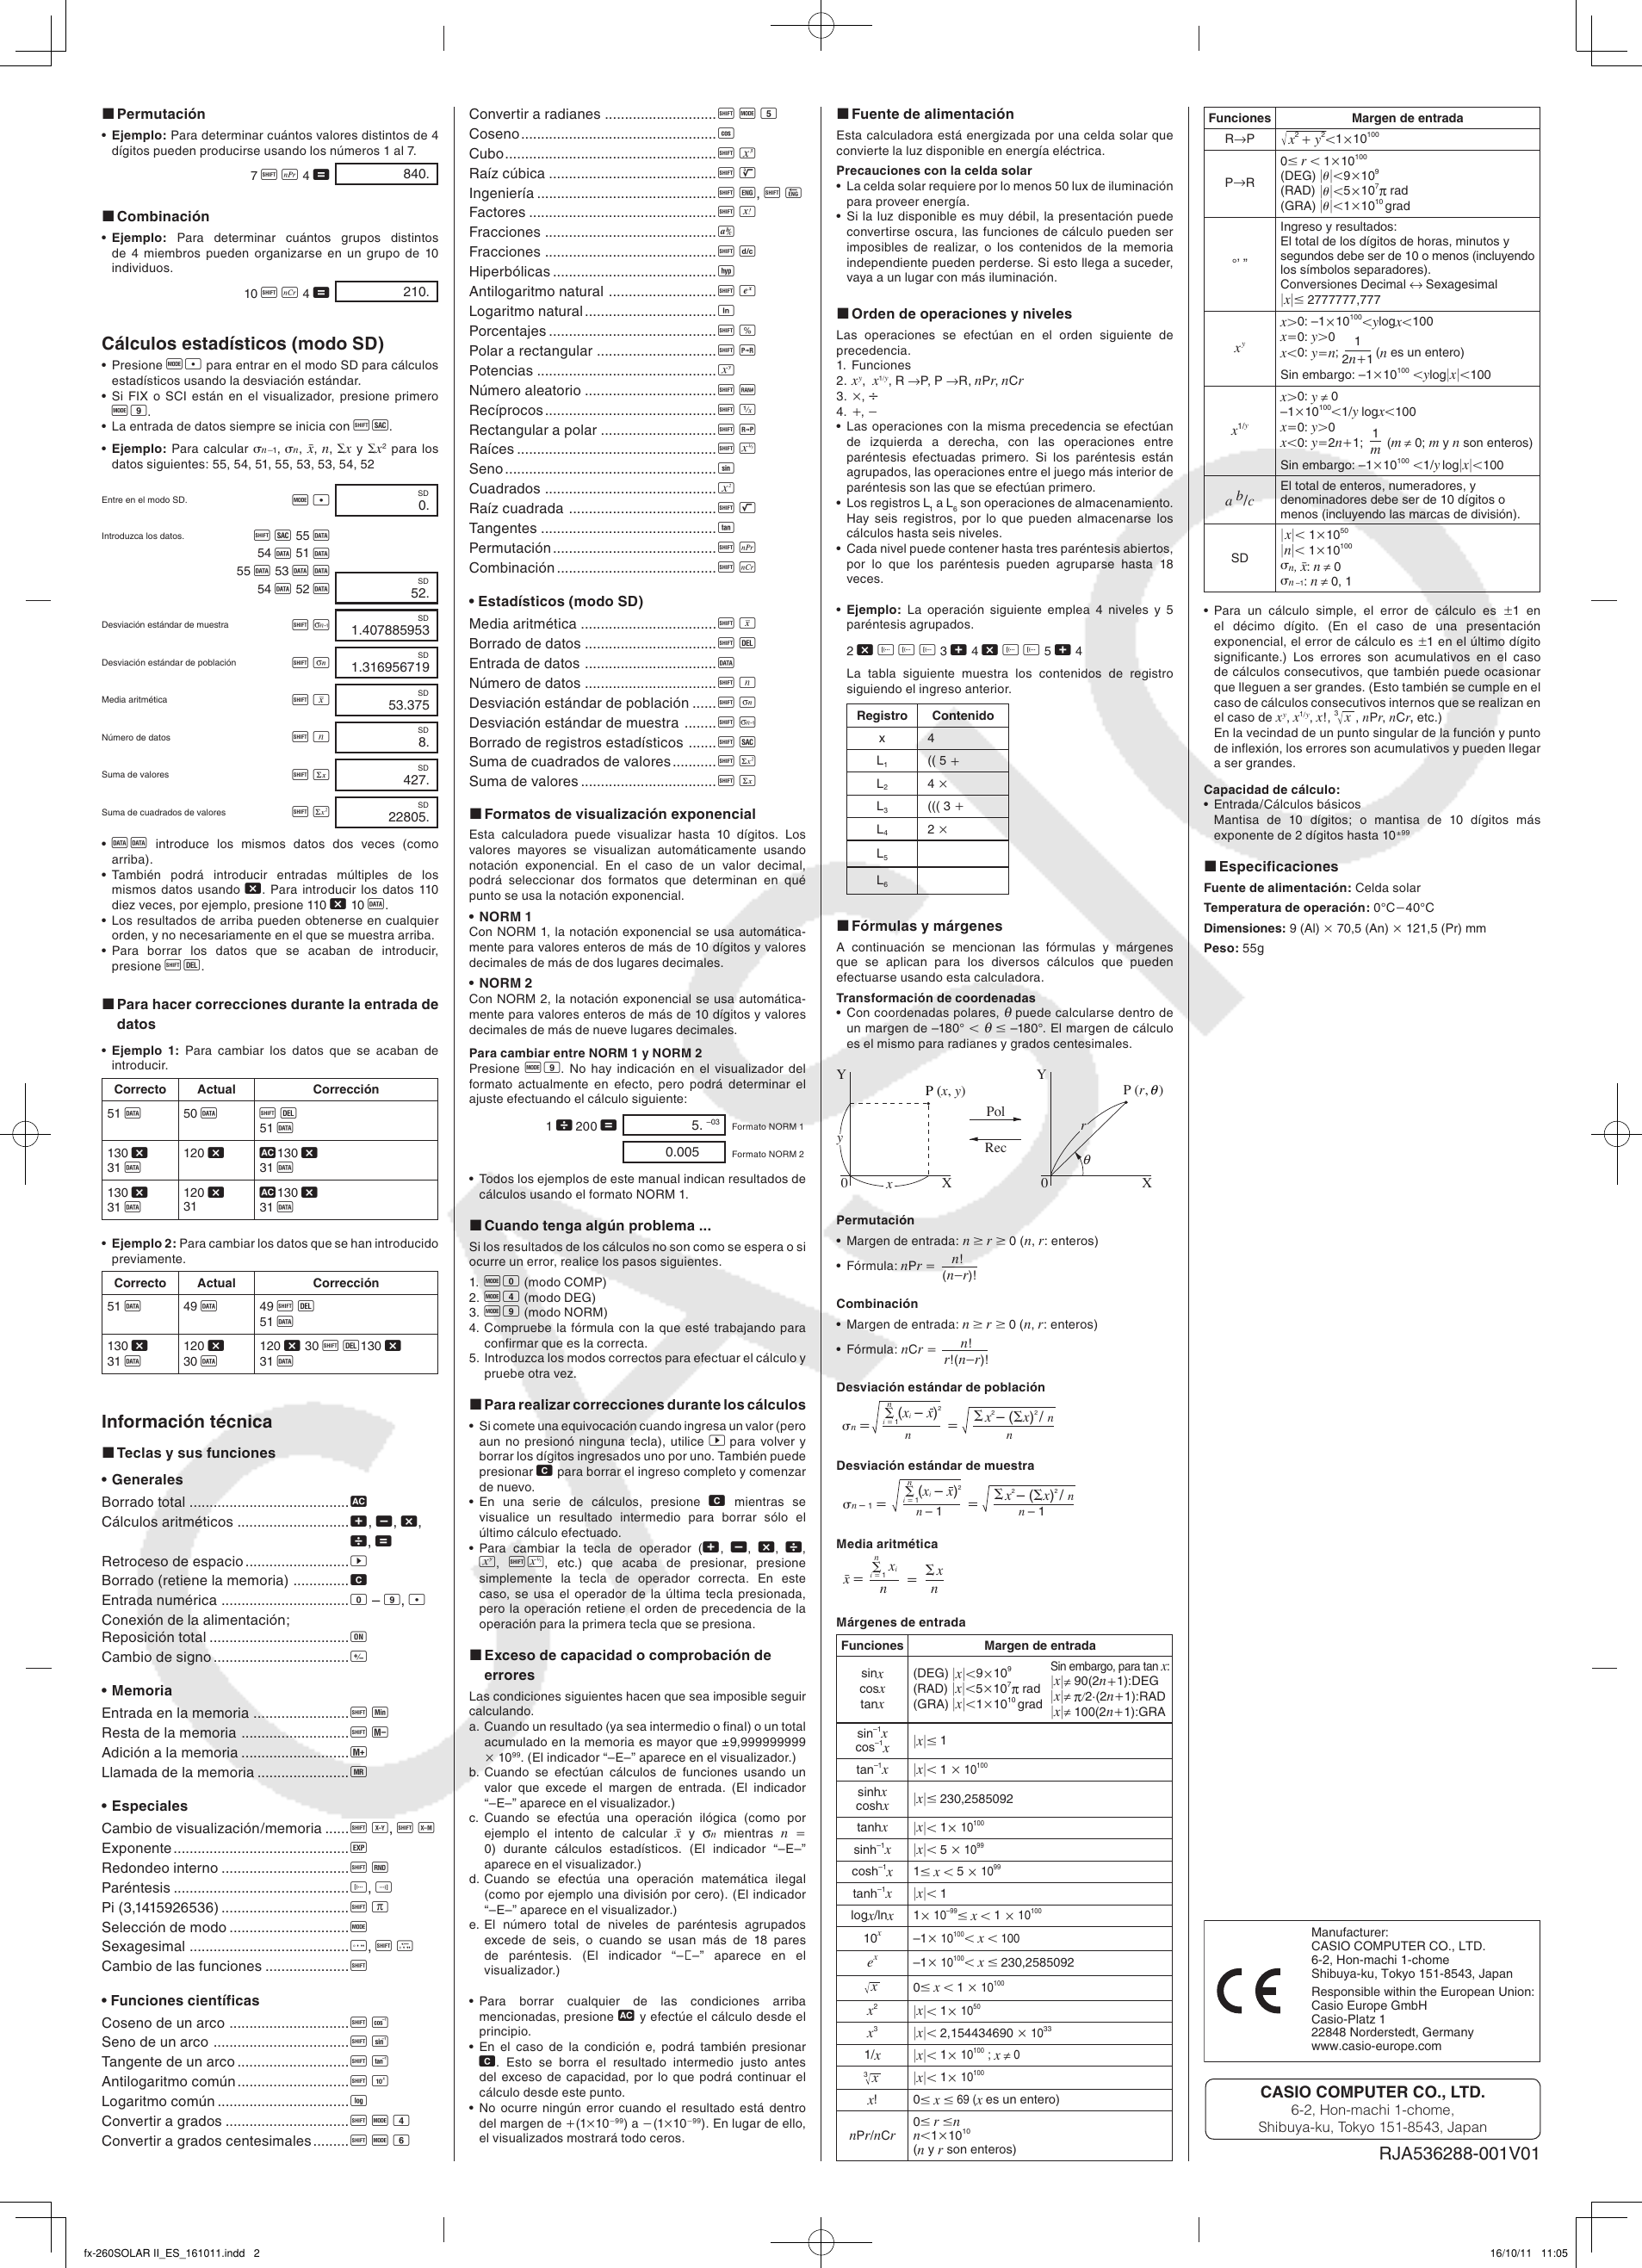 Page 2 of 2 - Casio Fx-260SOLAR II Fx-260SOLARII ES